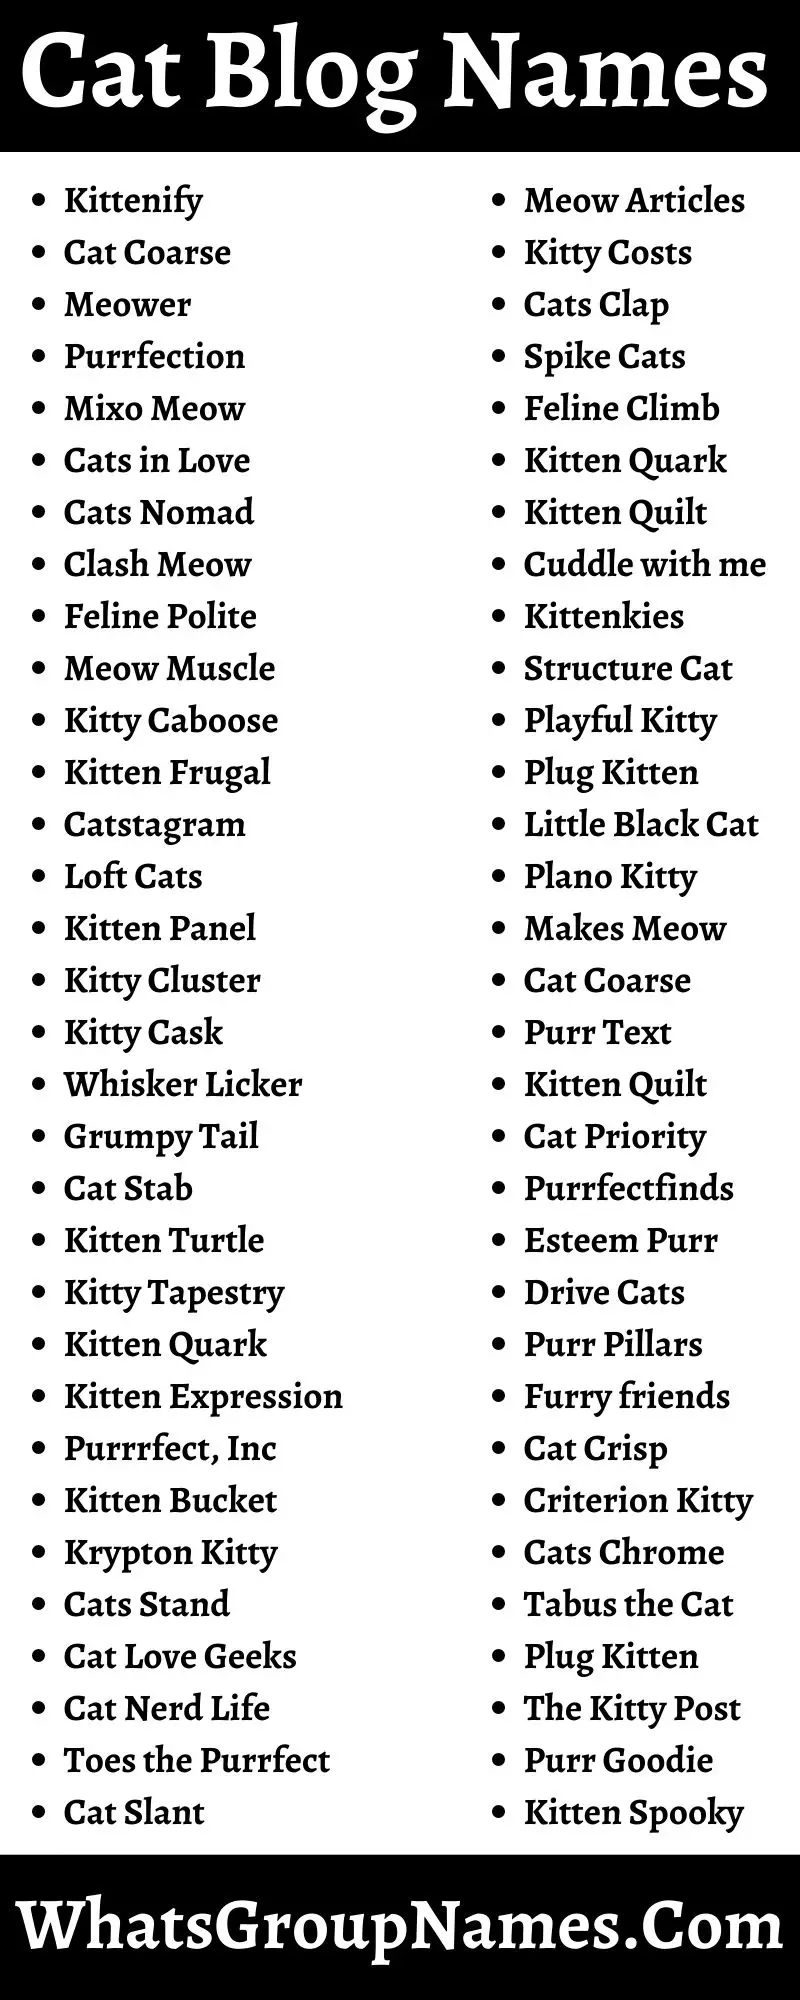 Cat Blog Names